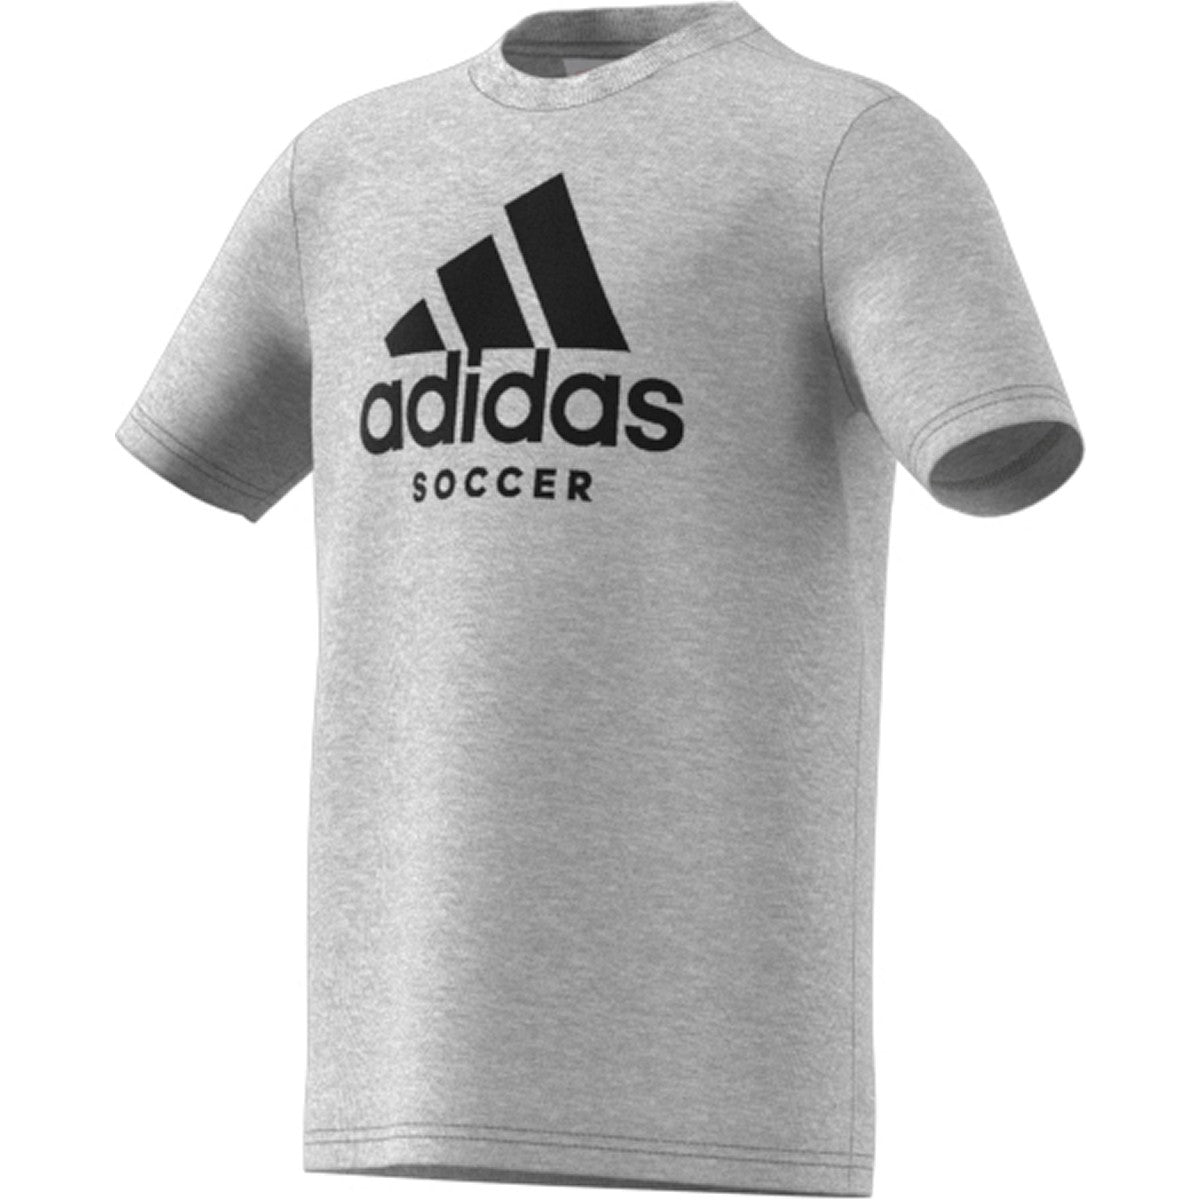 Adidas Soccer Logo Tee